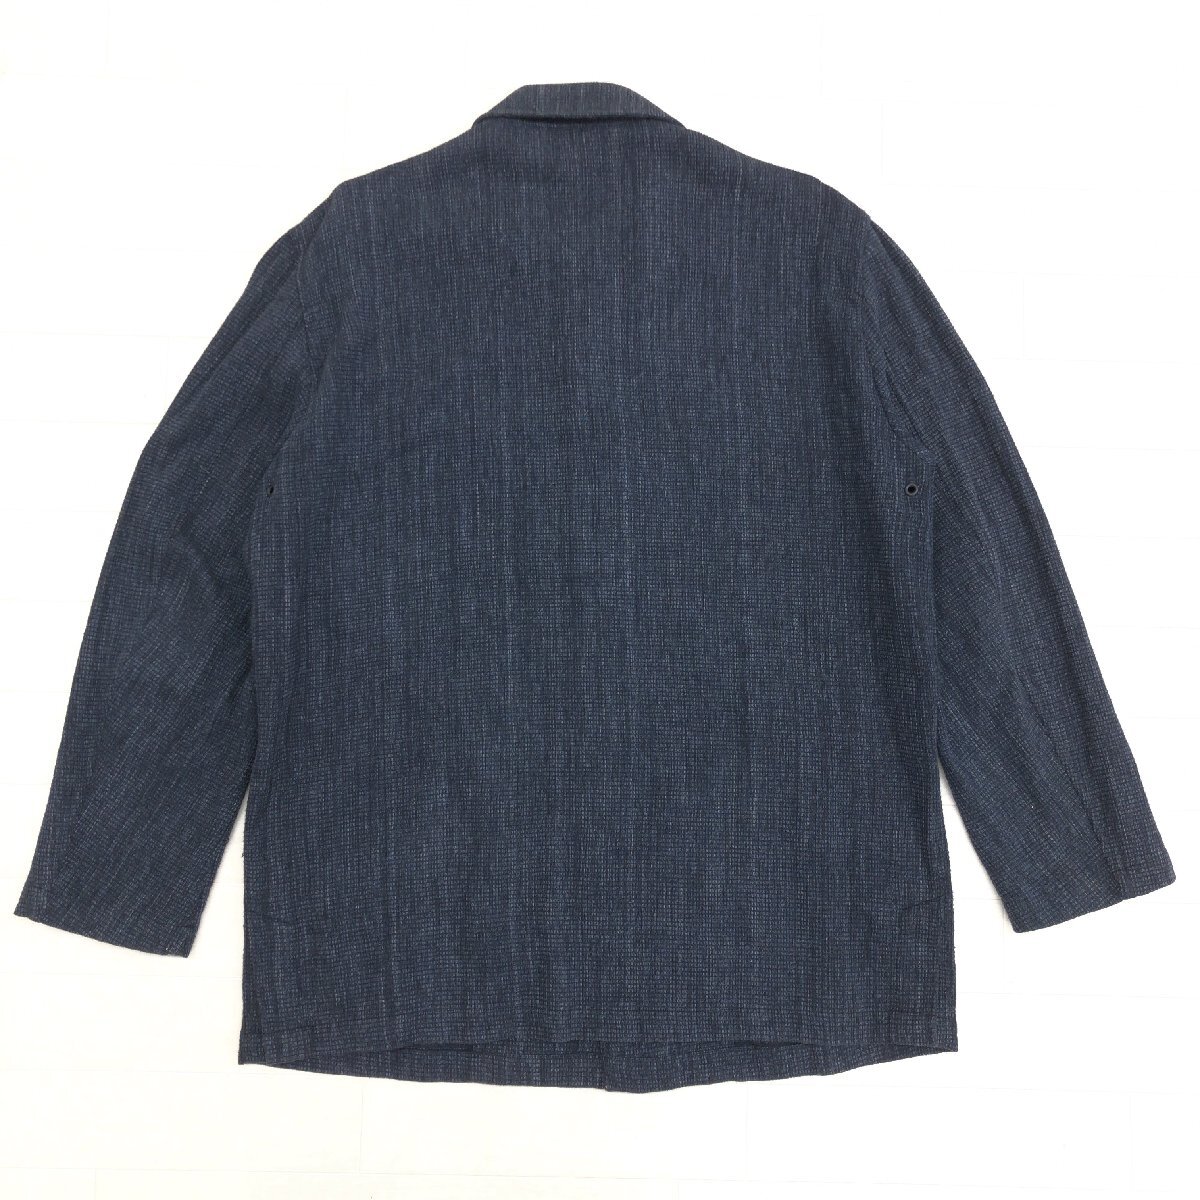 ●gotairiku 五大陸 麻 リネン混 サマージャケット 48(L) 紺 ネイビー ショートコート リネンジャケット 羽織り 国内正規品 メンズ 紳士の画像2